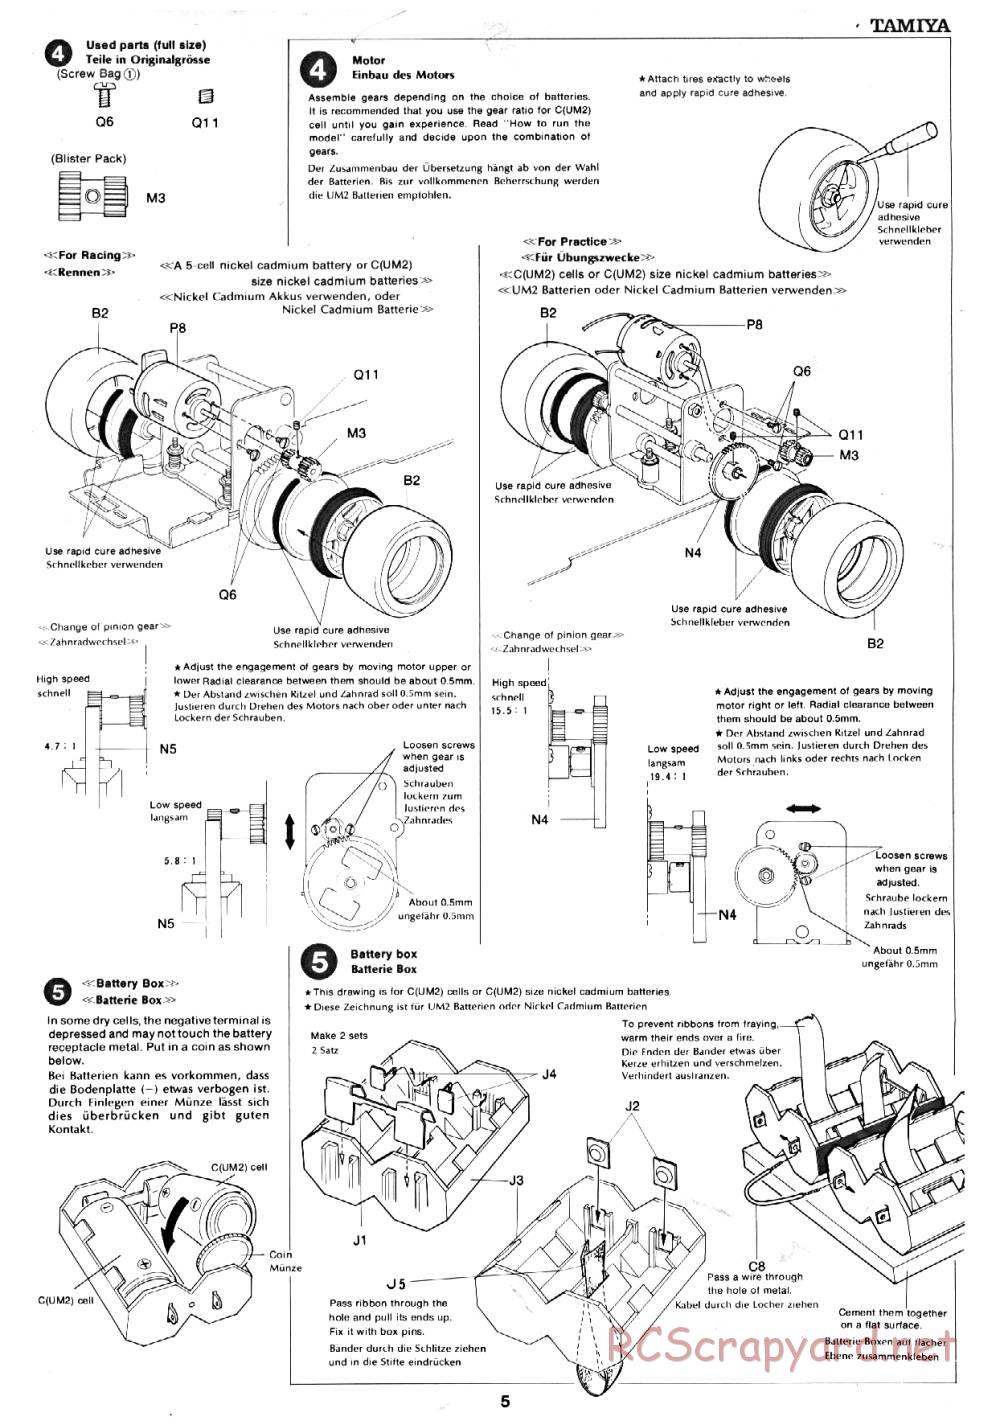 Tamiya - Martini Porsche 935 Turbo - 58002 - Manual - Page 5